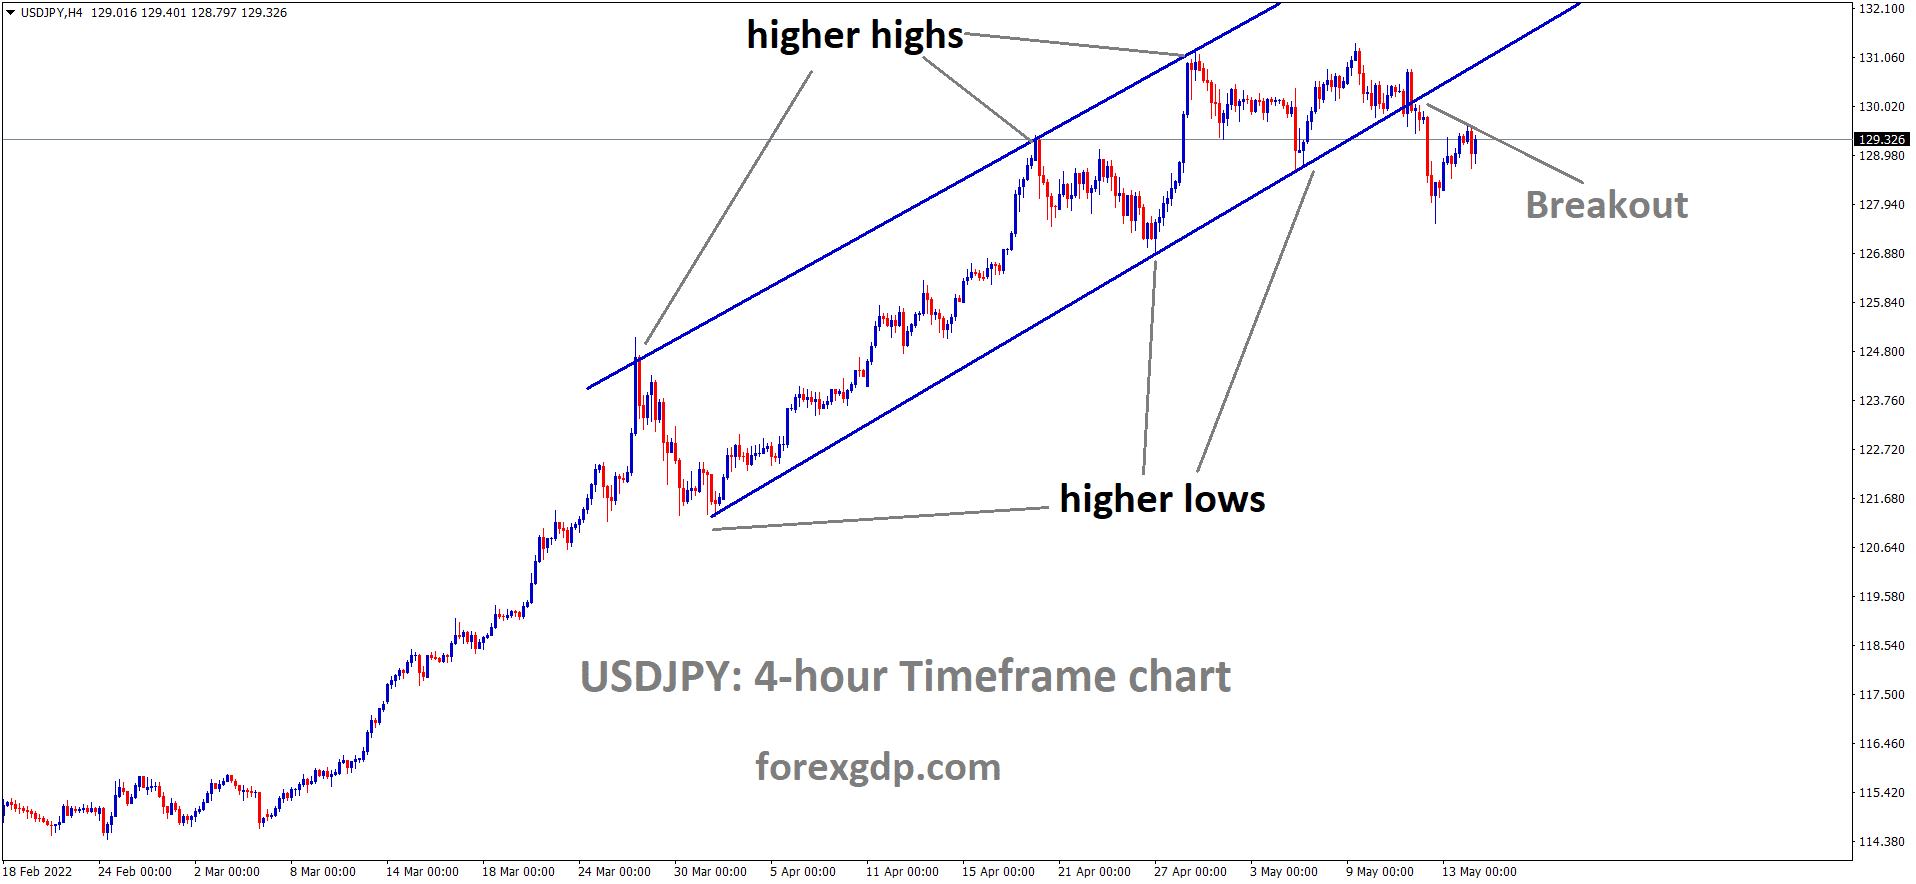 USDJPY H4 time Frame Analysis Market has broken the Ascending channel Pattern